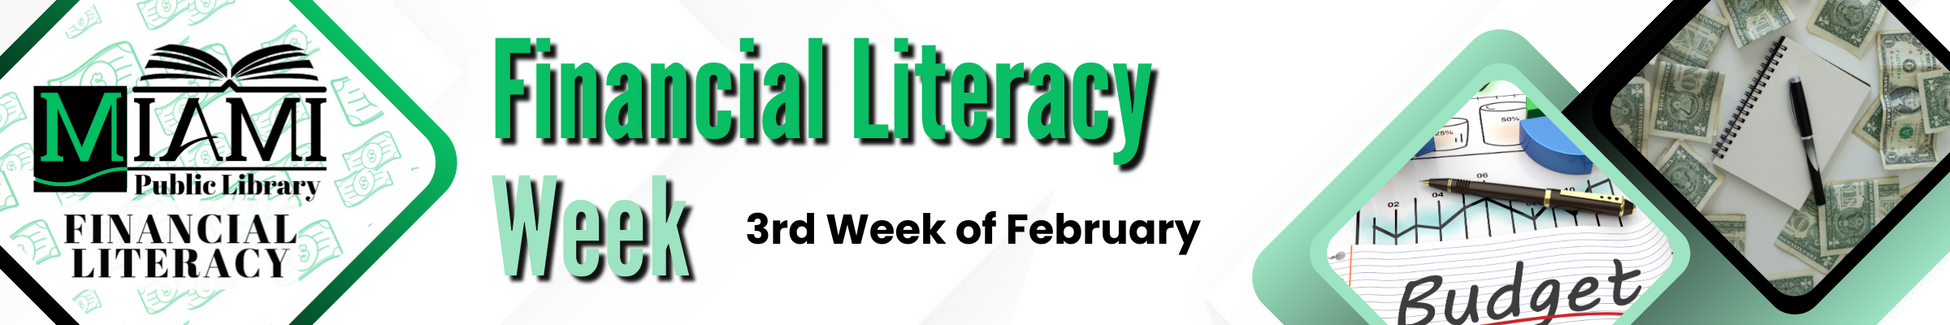 Financial Literacy Week Third Week of February